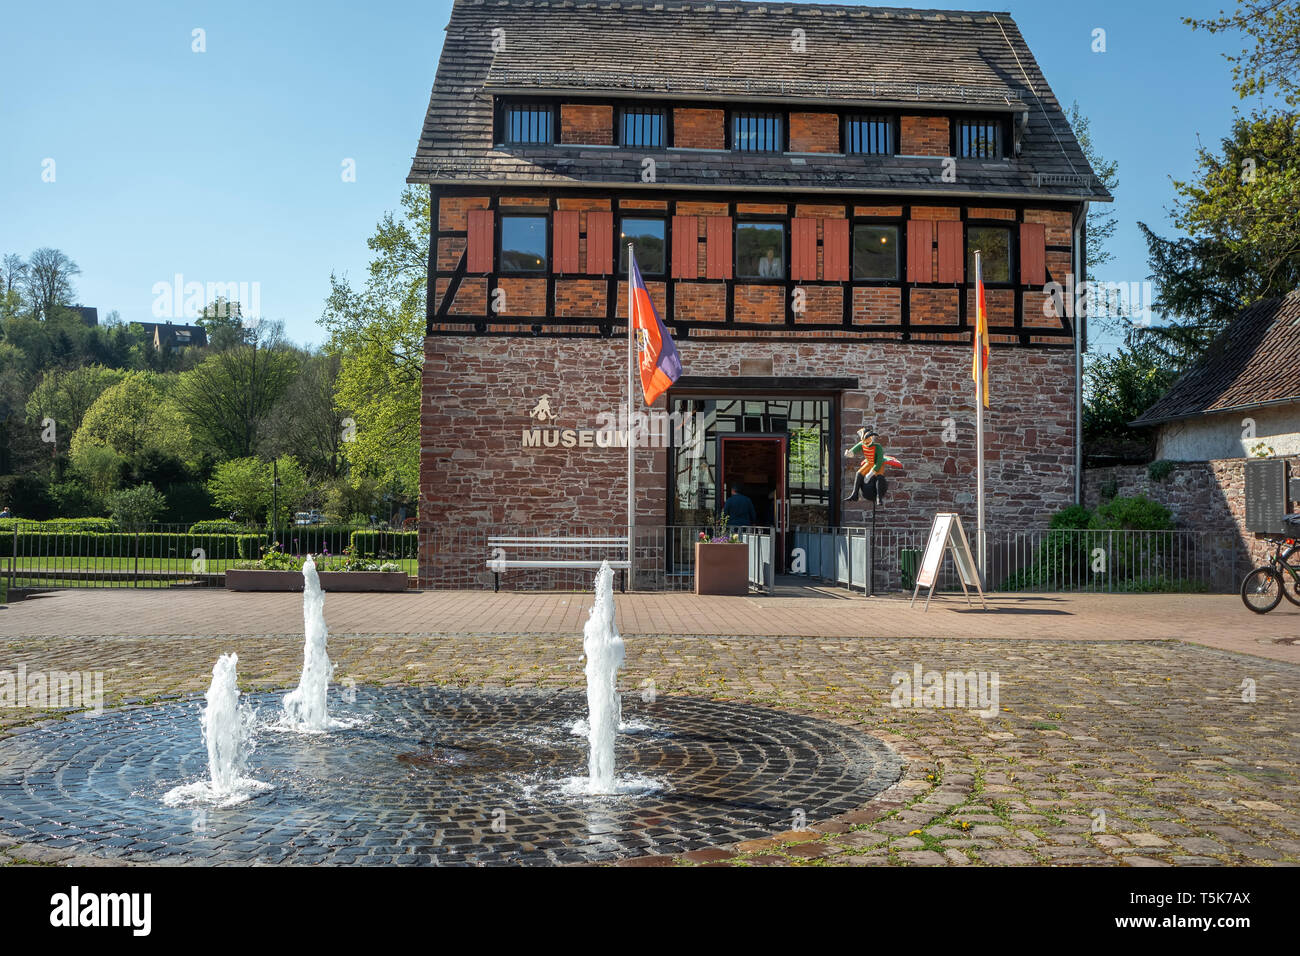 Bodenwerder, Germany, 21/04/2019: Baron Munchausen museum in Bodenwerder Stock Photo